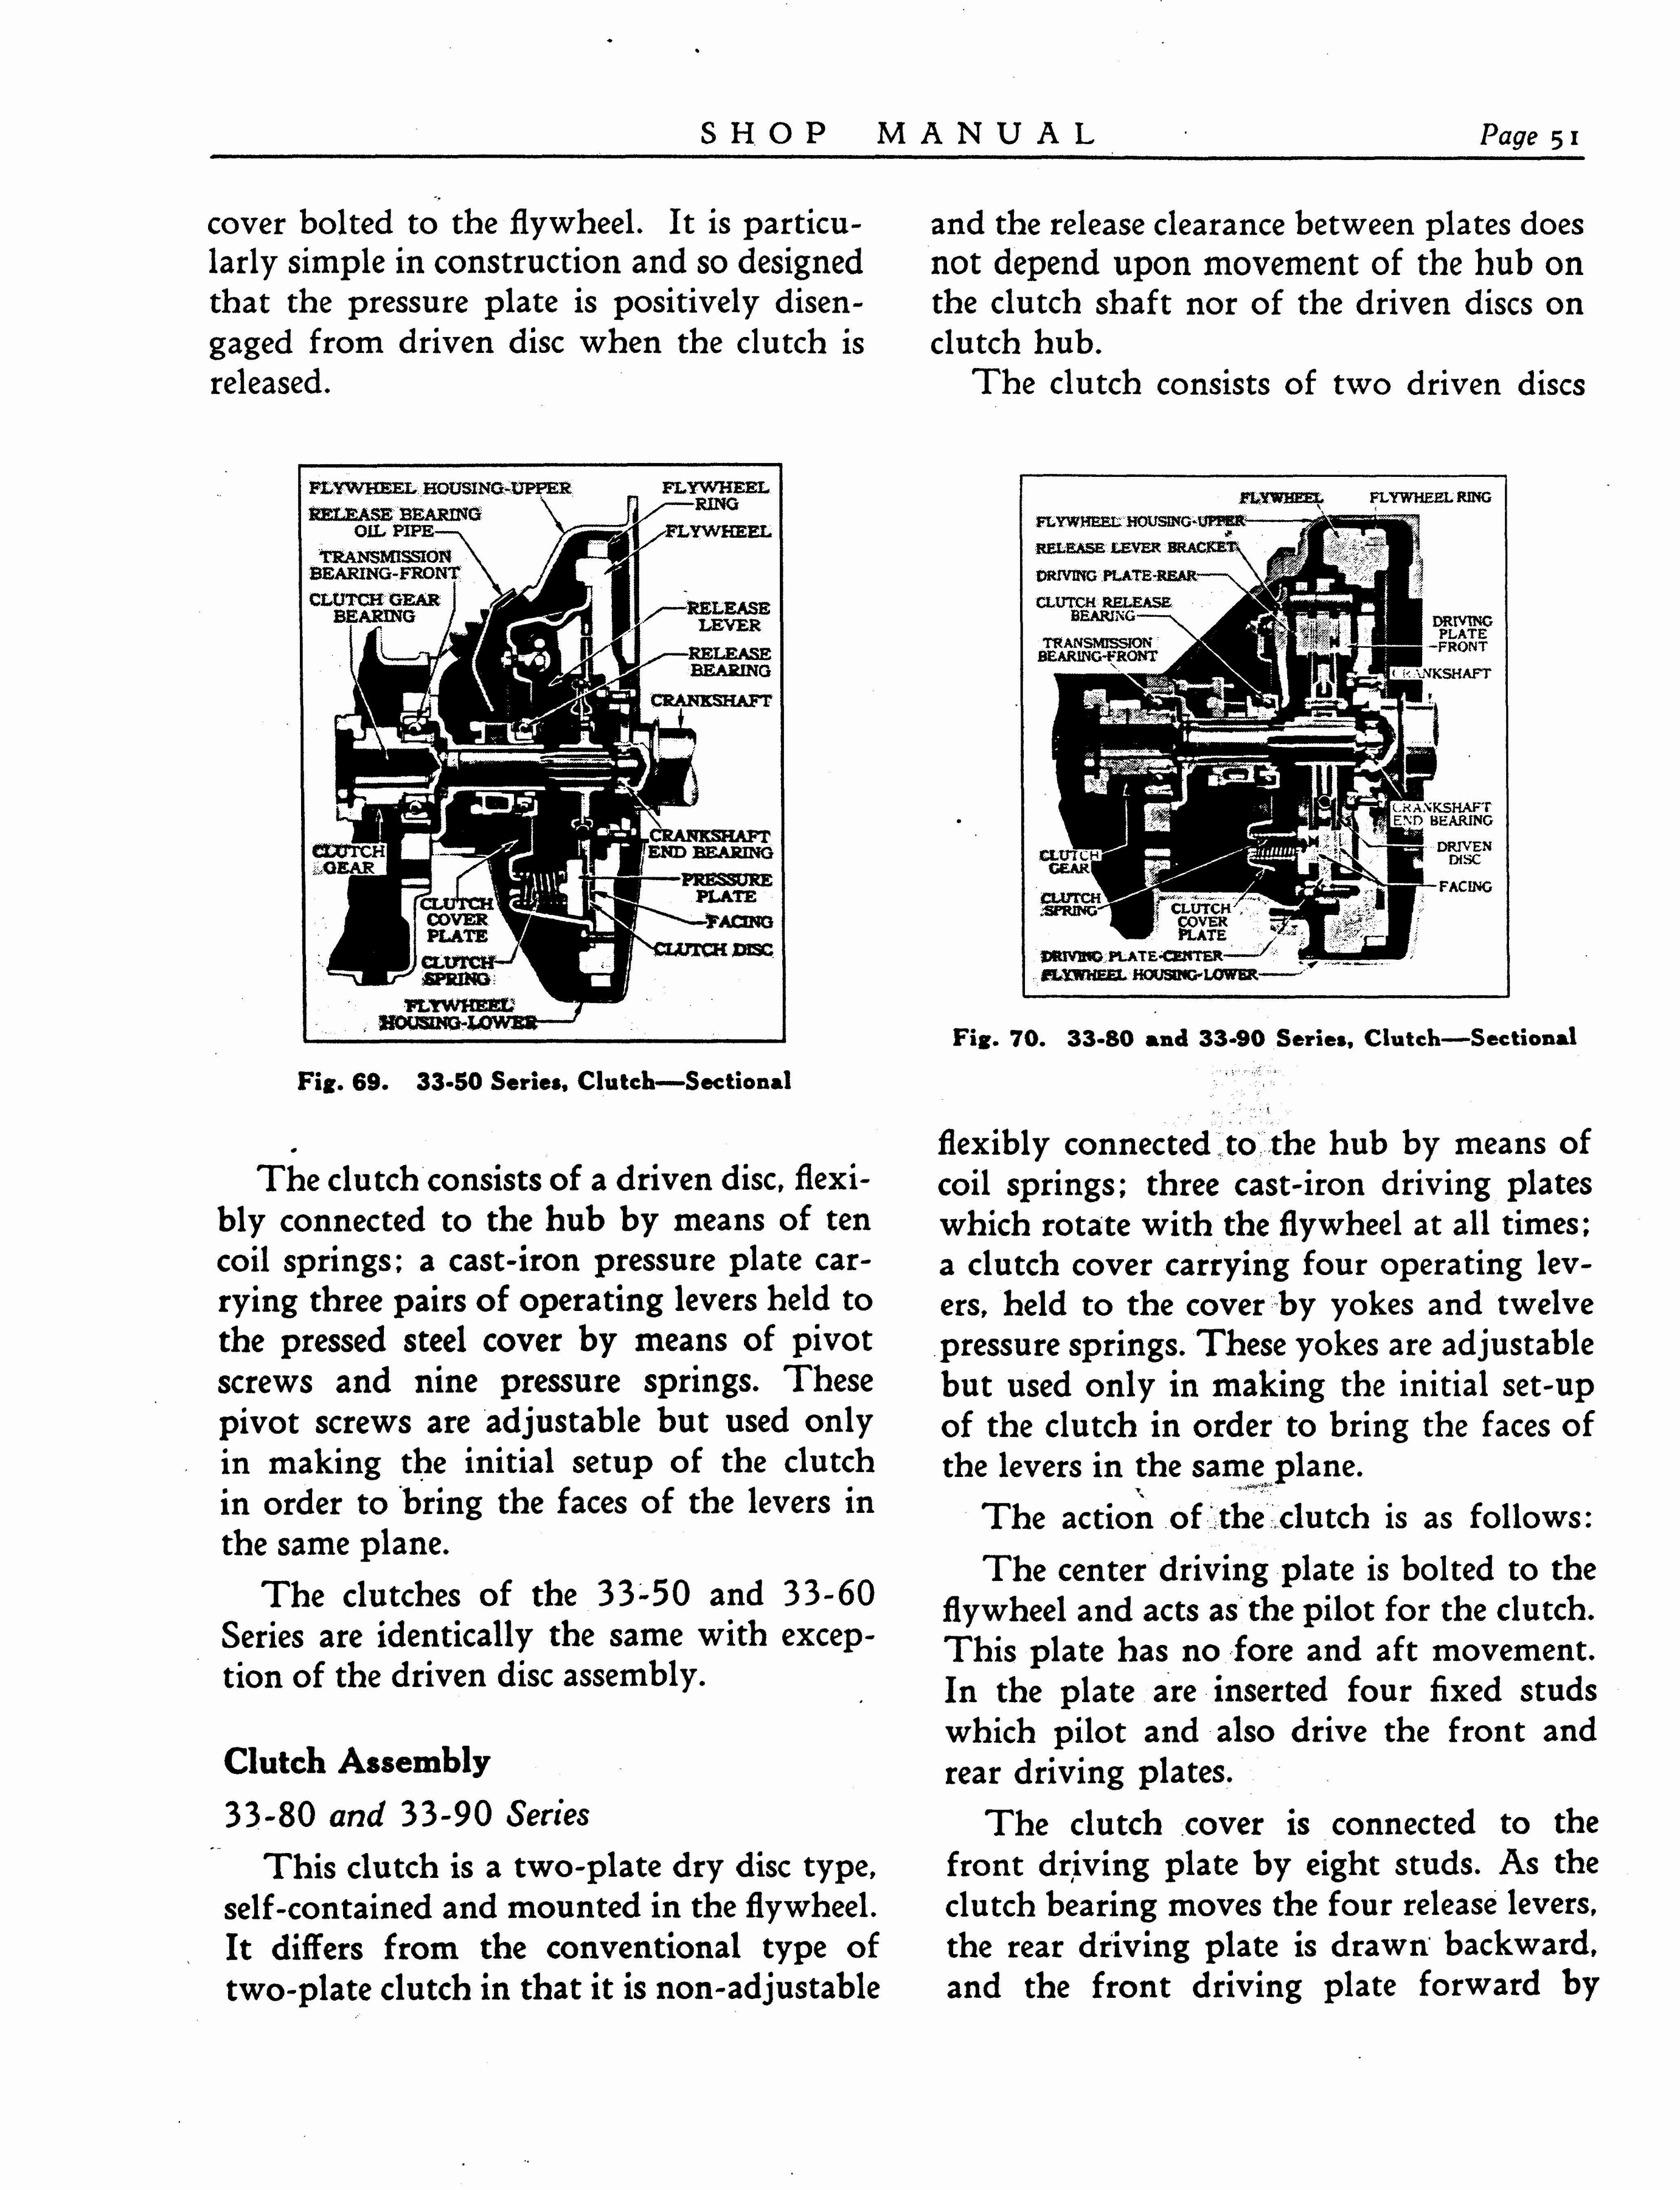 n_1933 Buick Shop Manual_Page_052.jpg